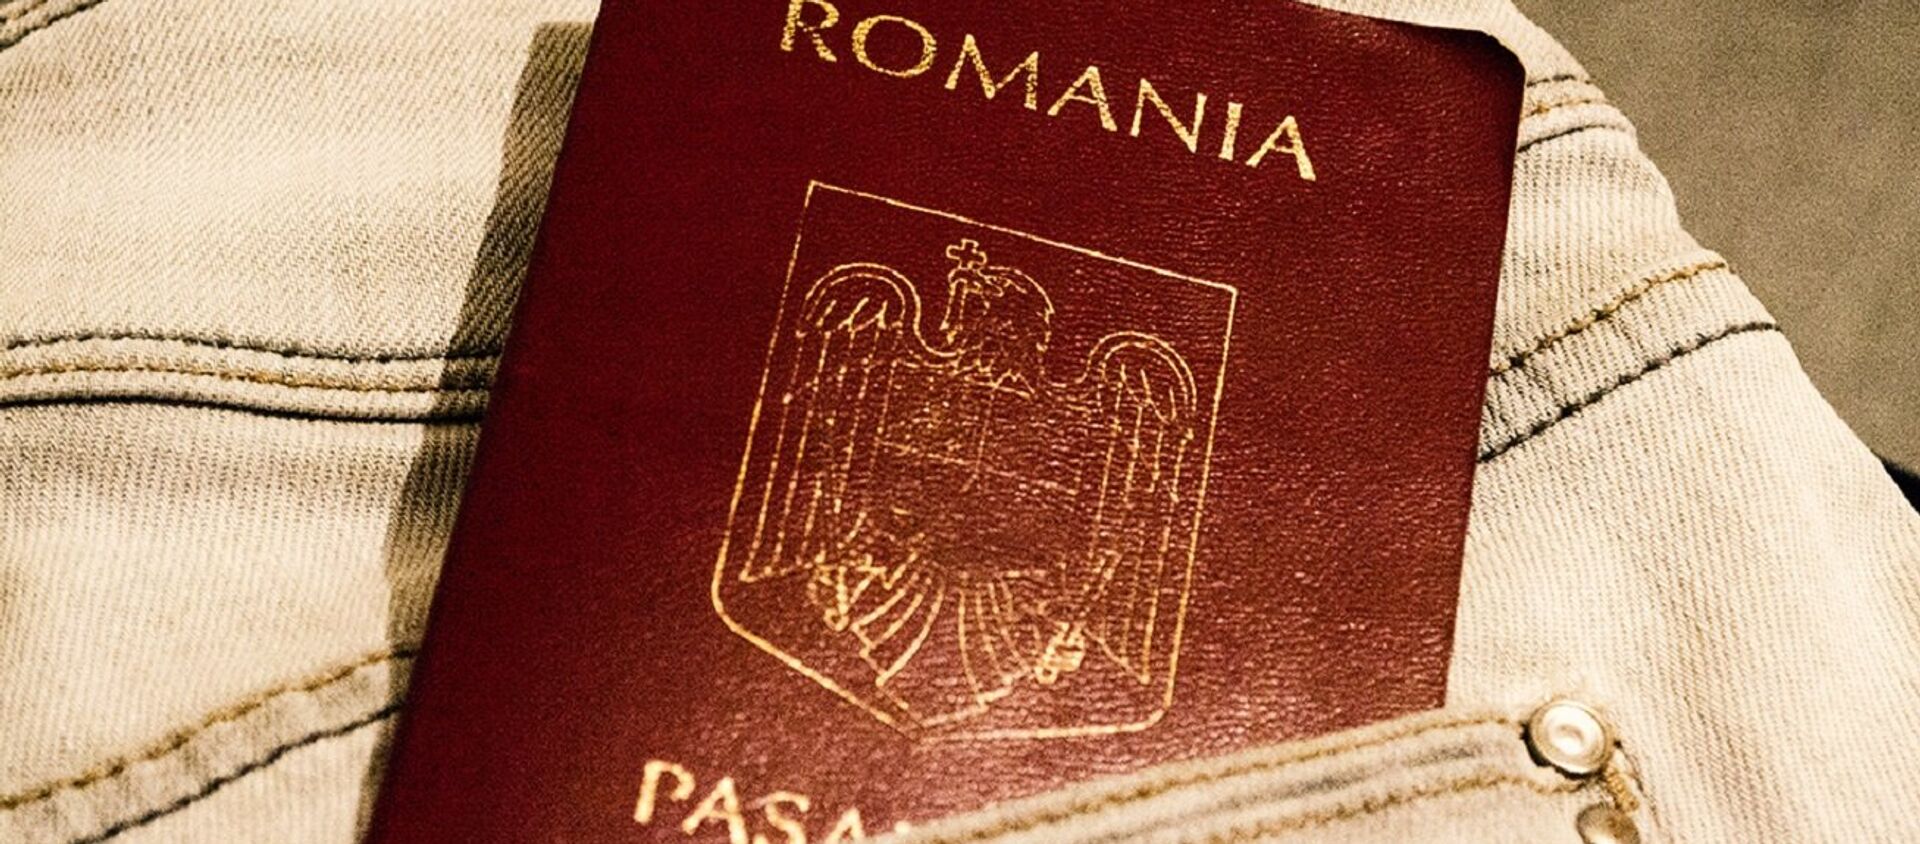 Pașaport românesc - Sputnik Moldova-România, 1920, 29.11.2017